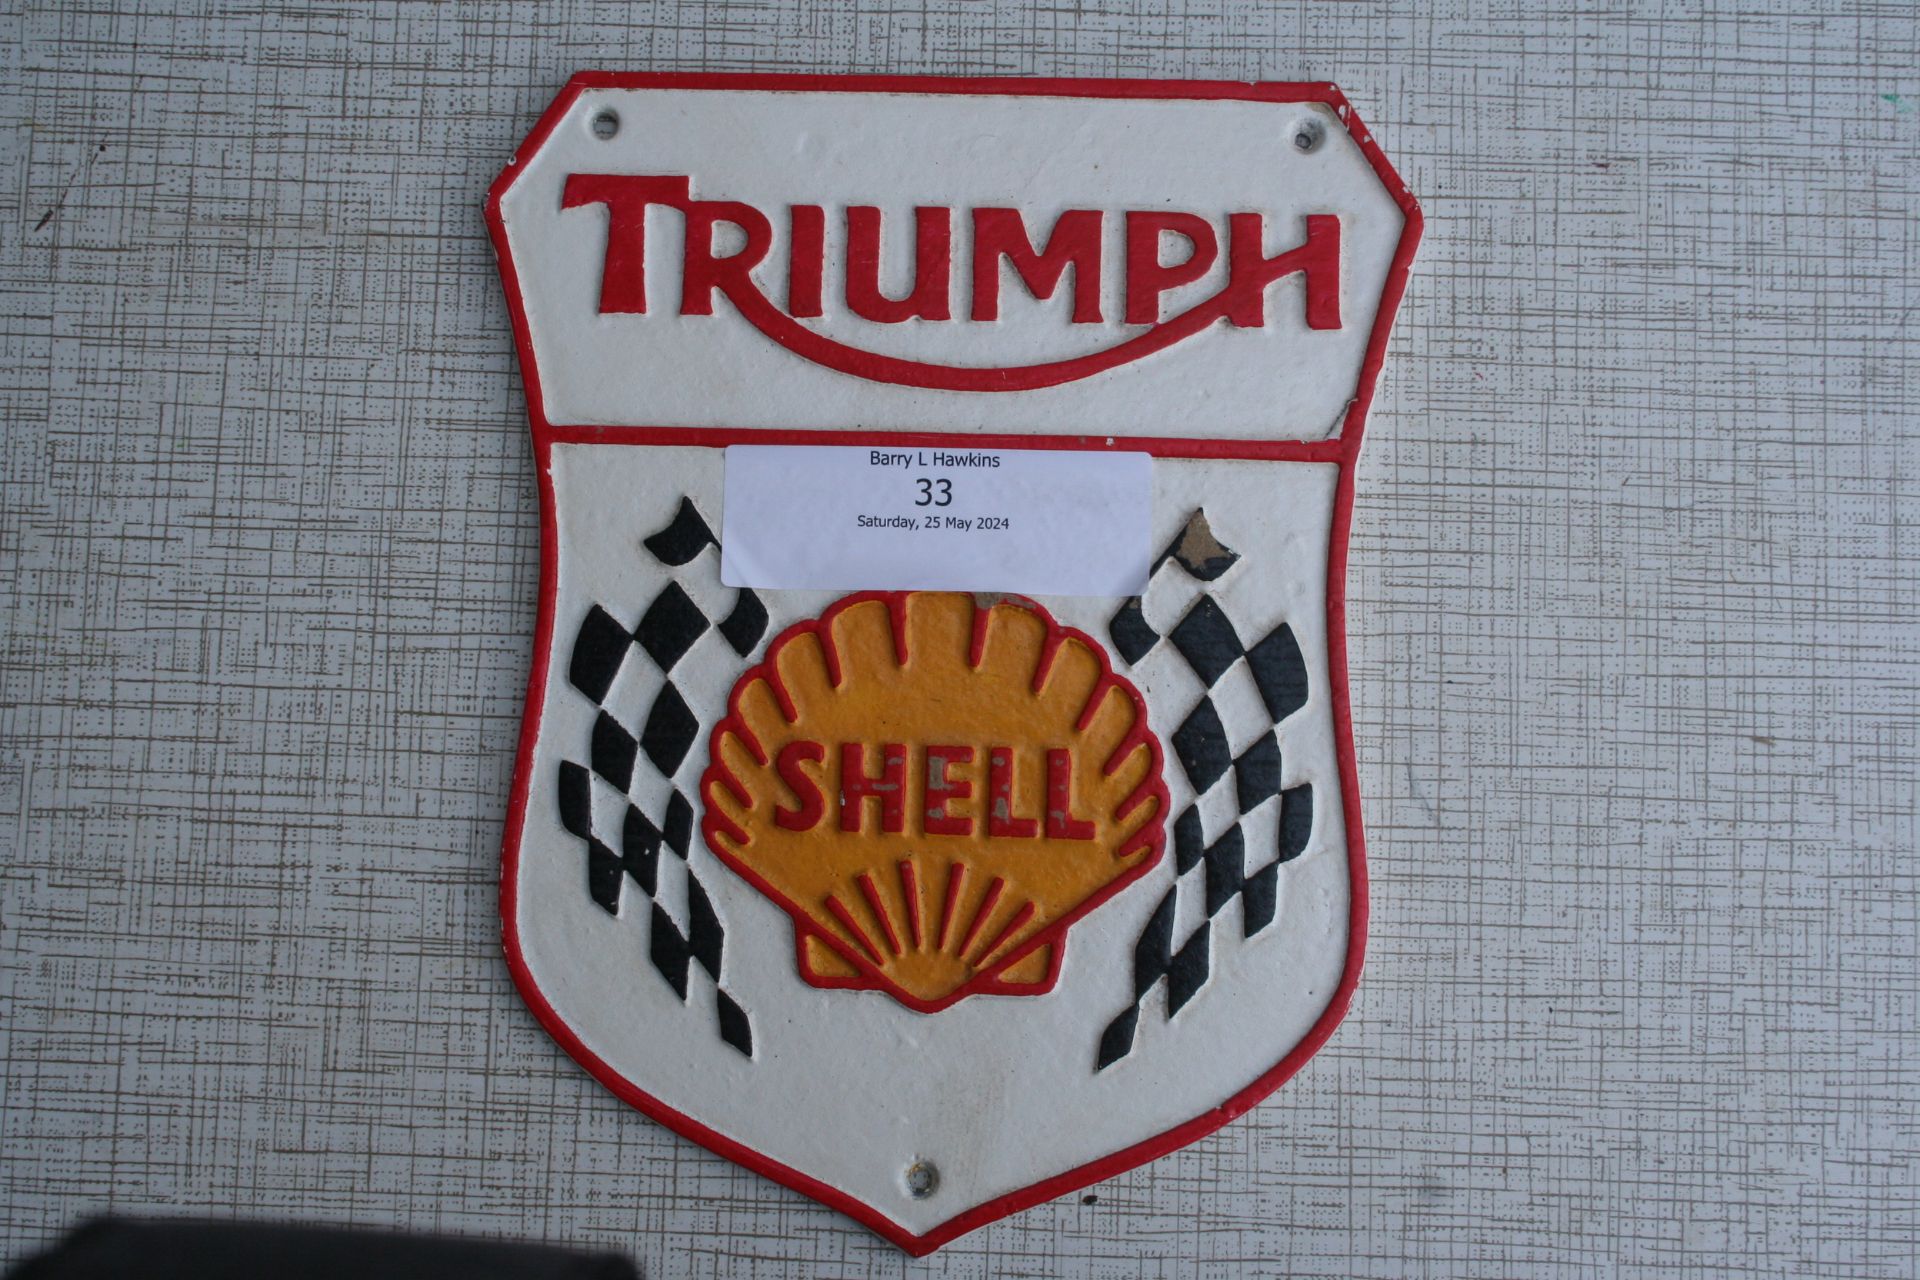 Triumph Shell plaque type N